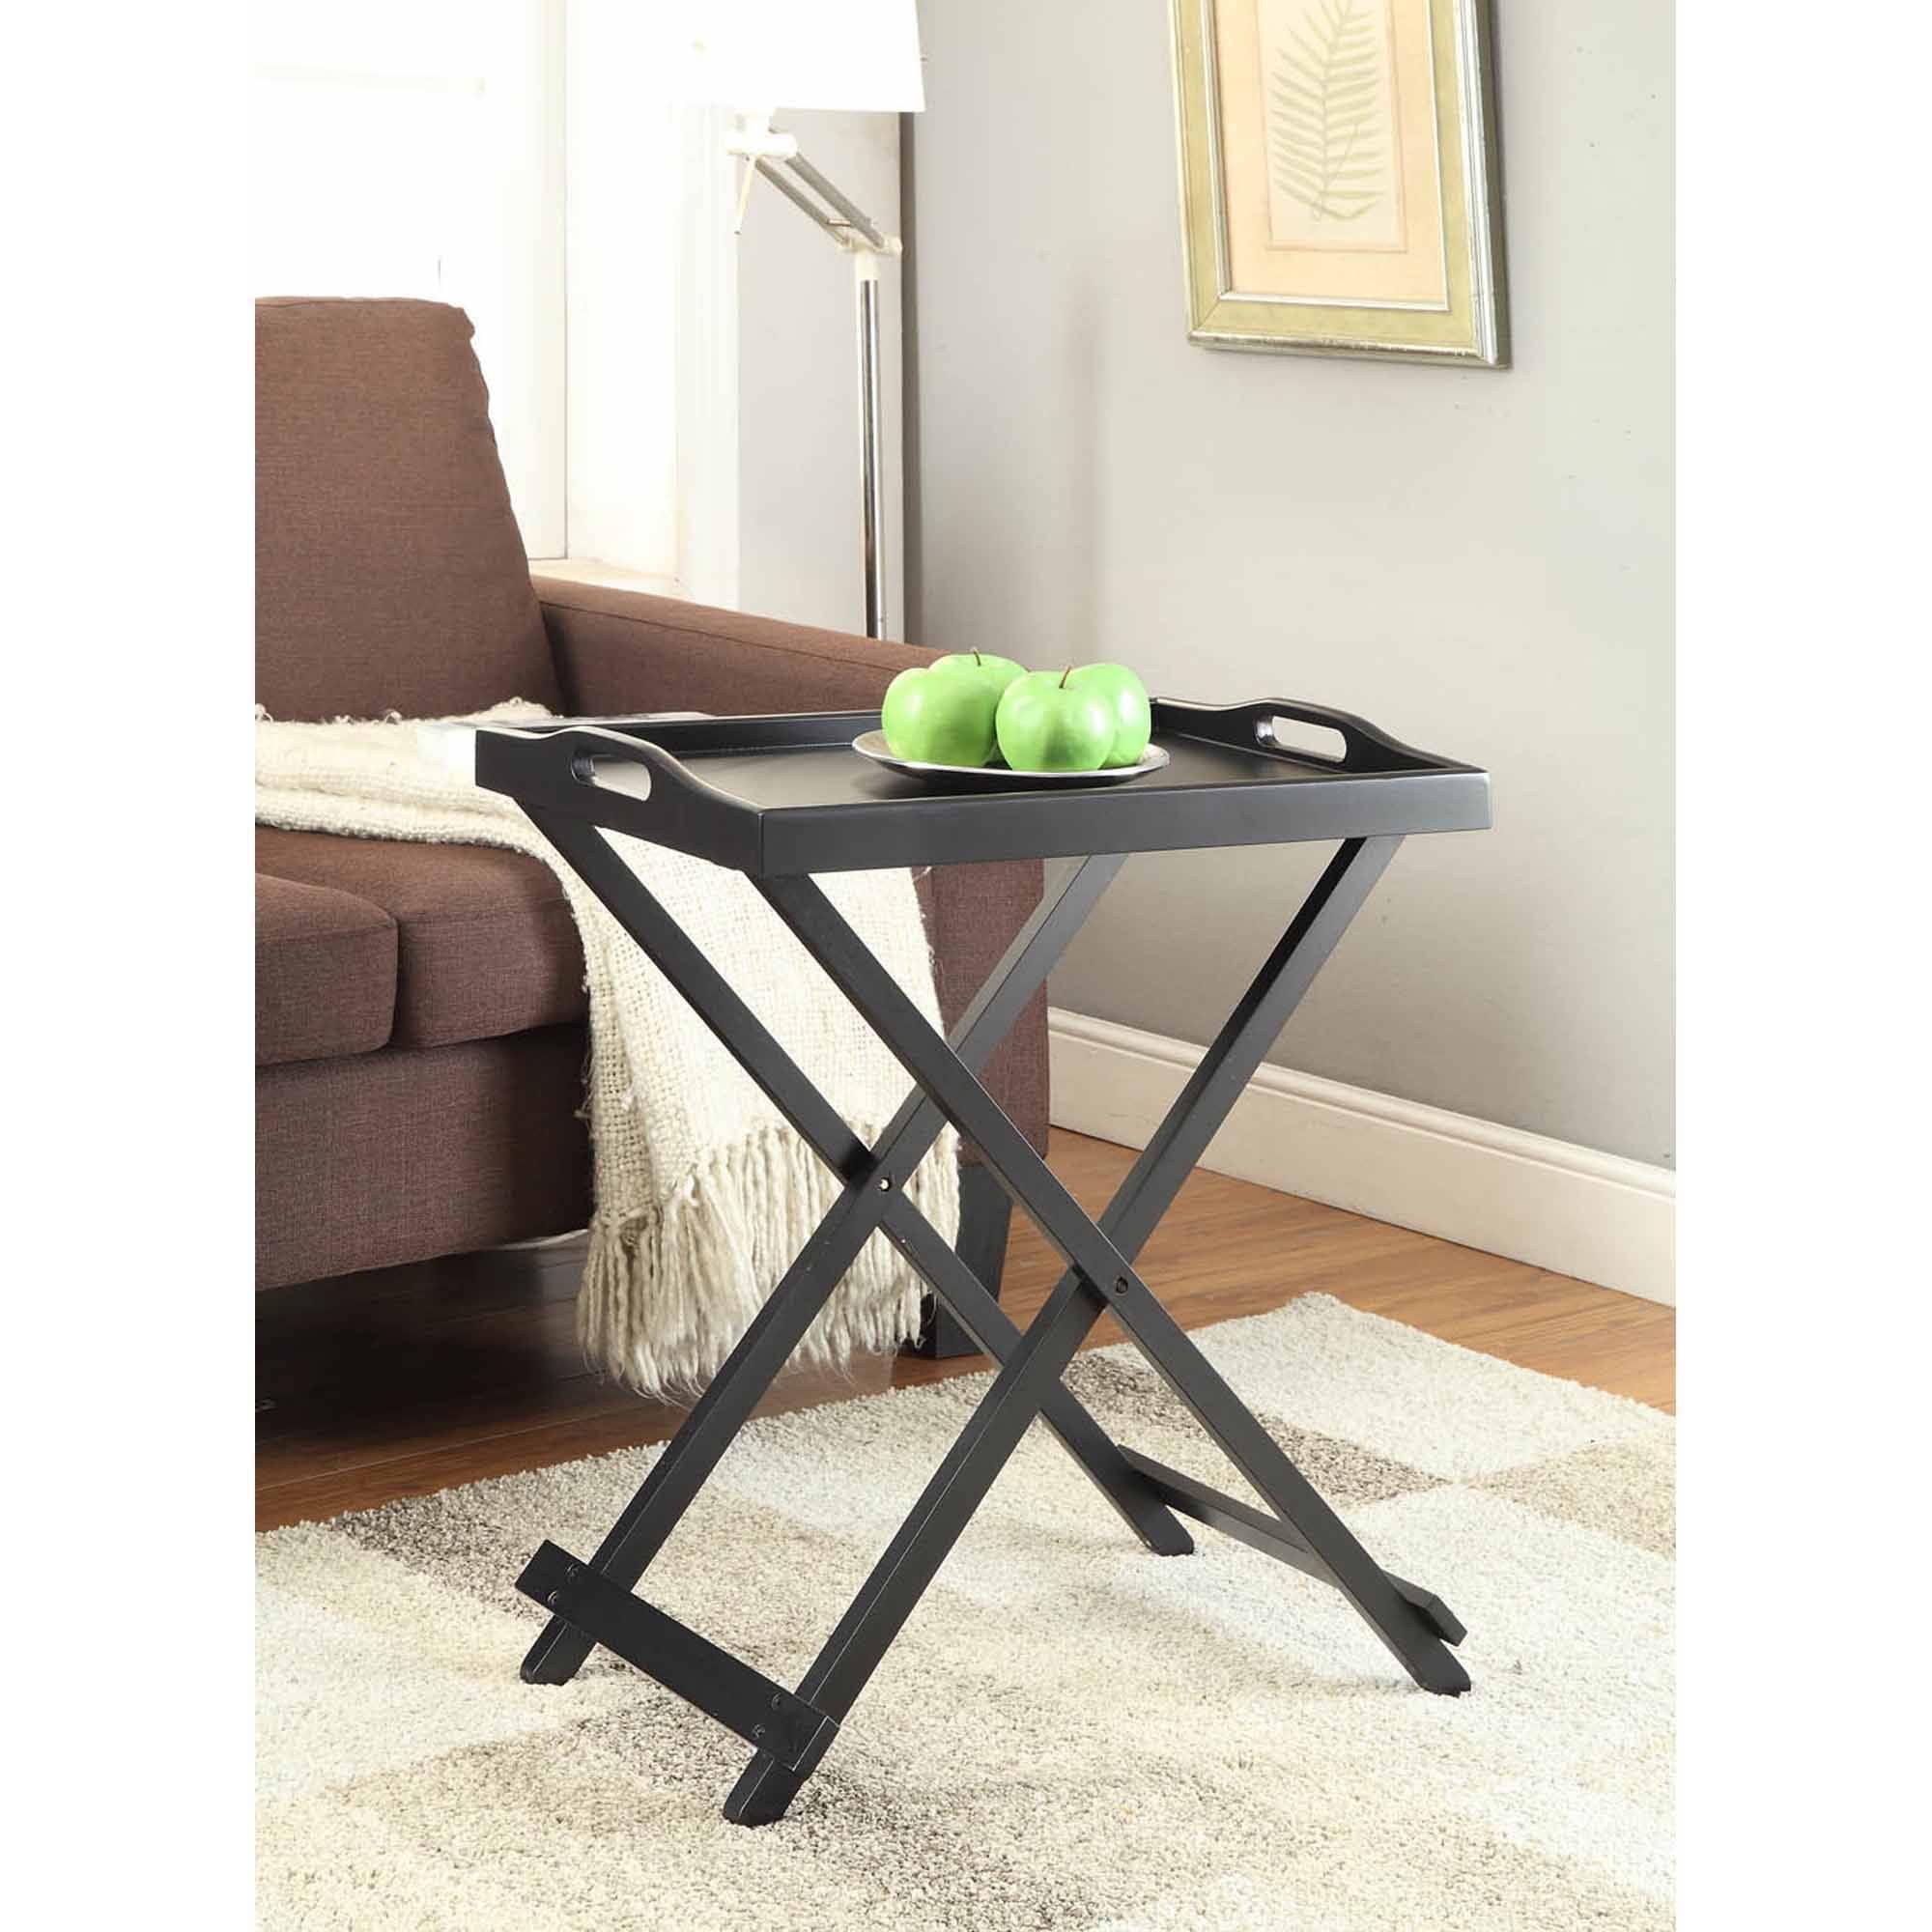 Designs2Go Sleek Black Folding Tray Table with Easy-Fold Legs